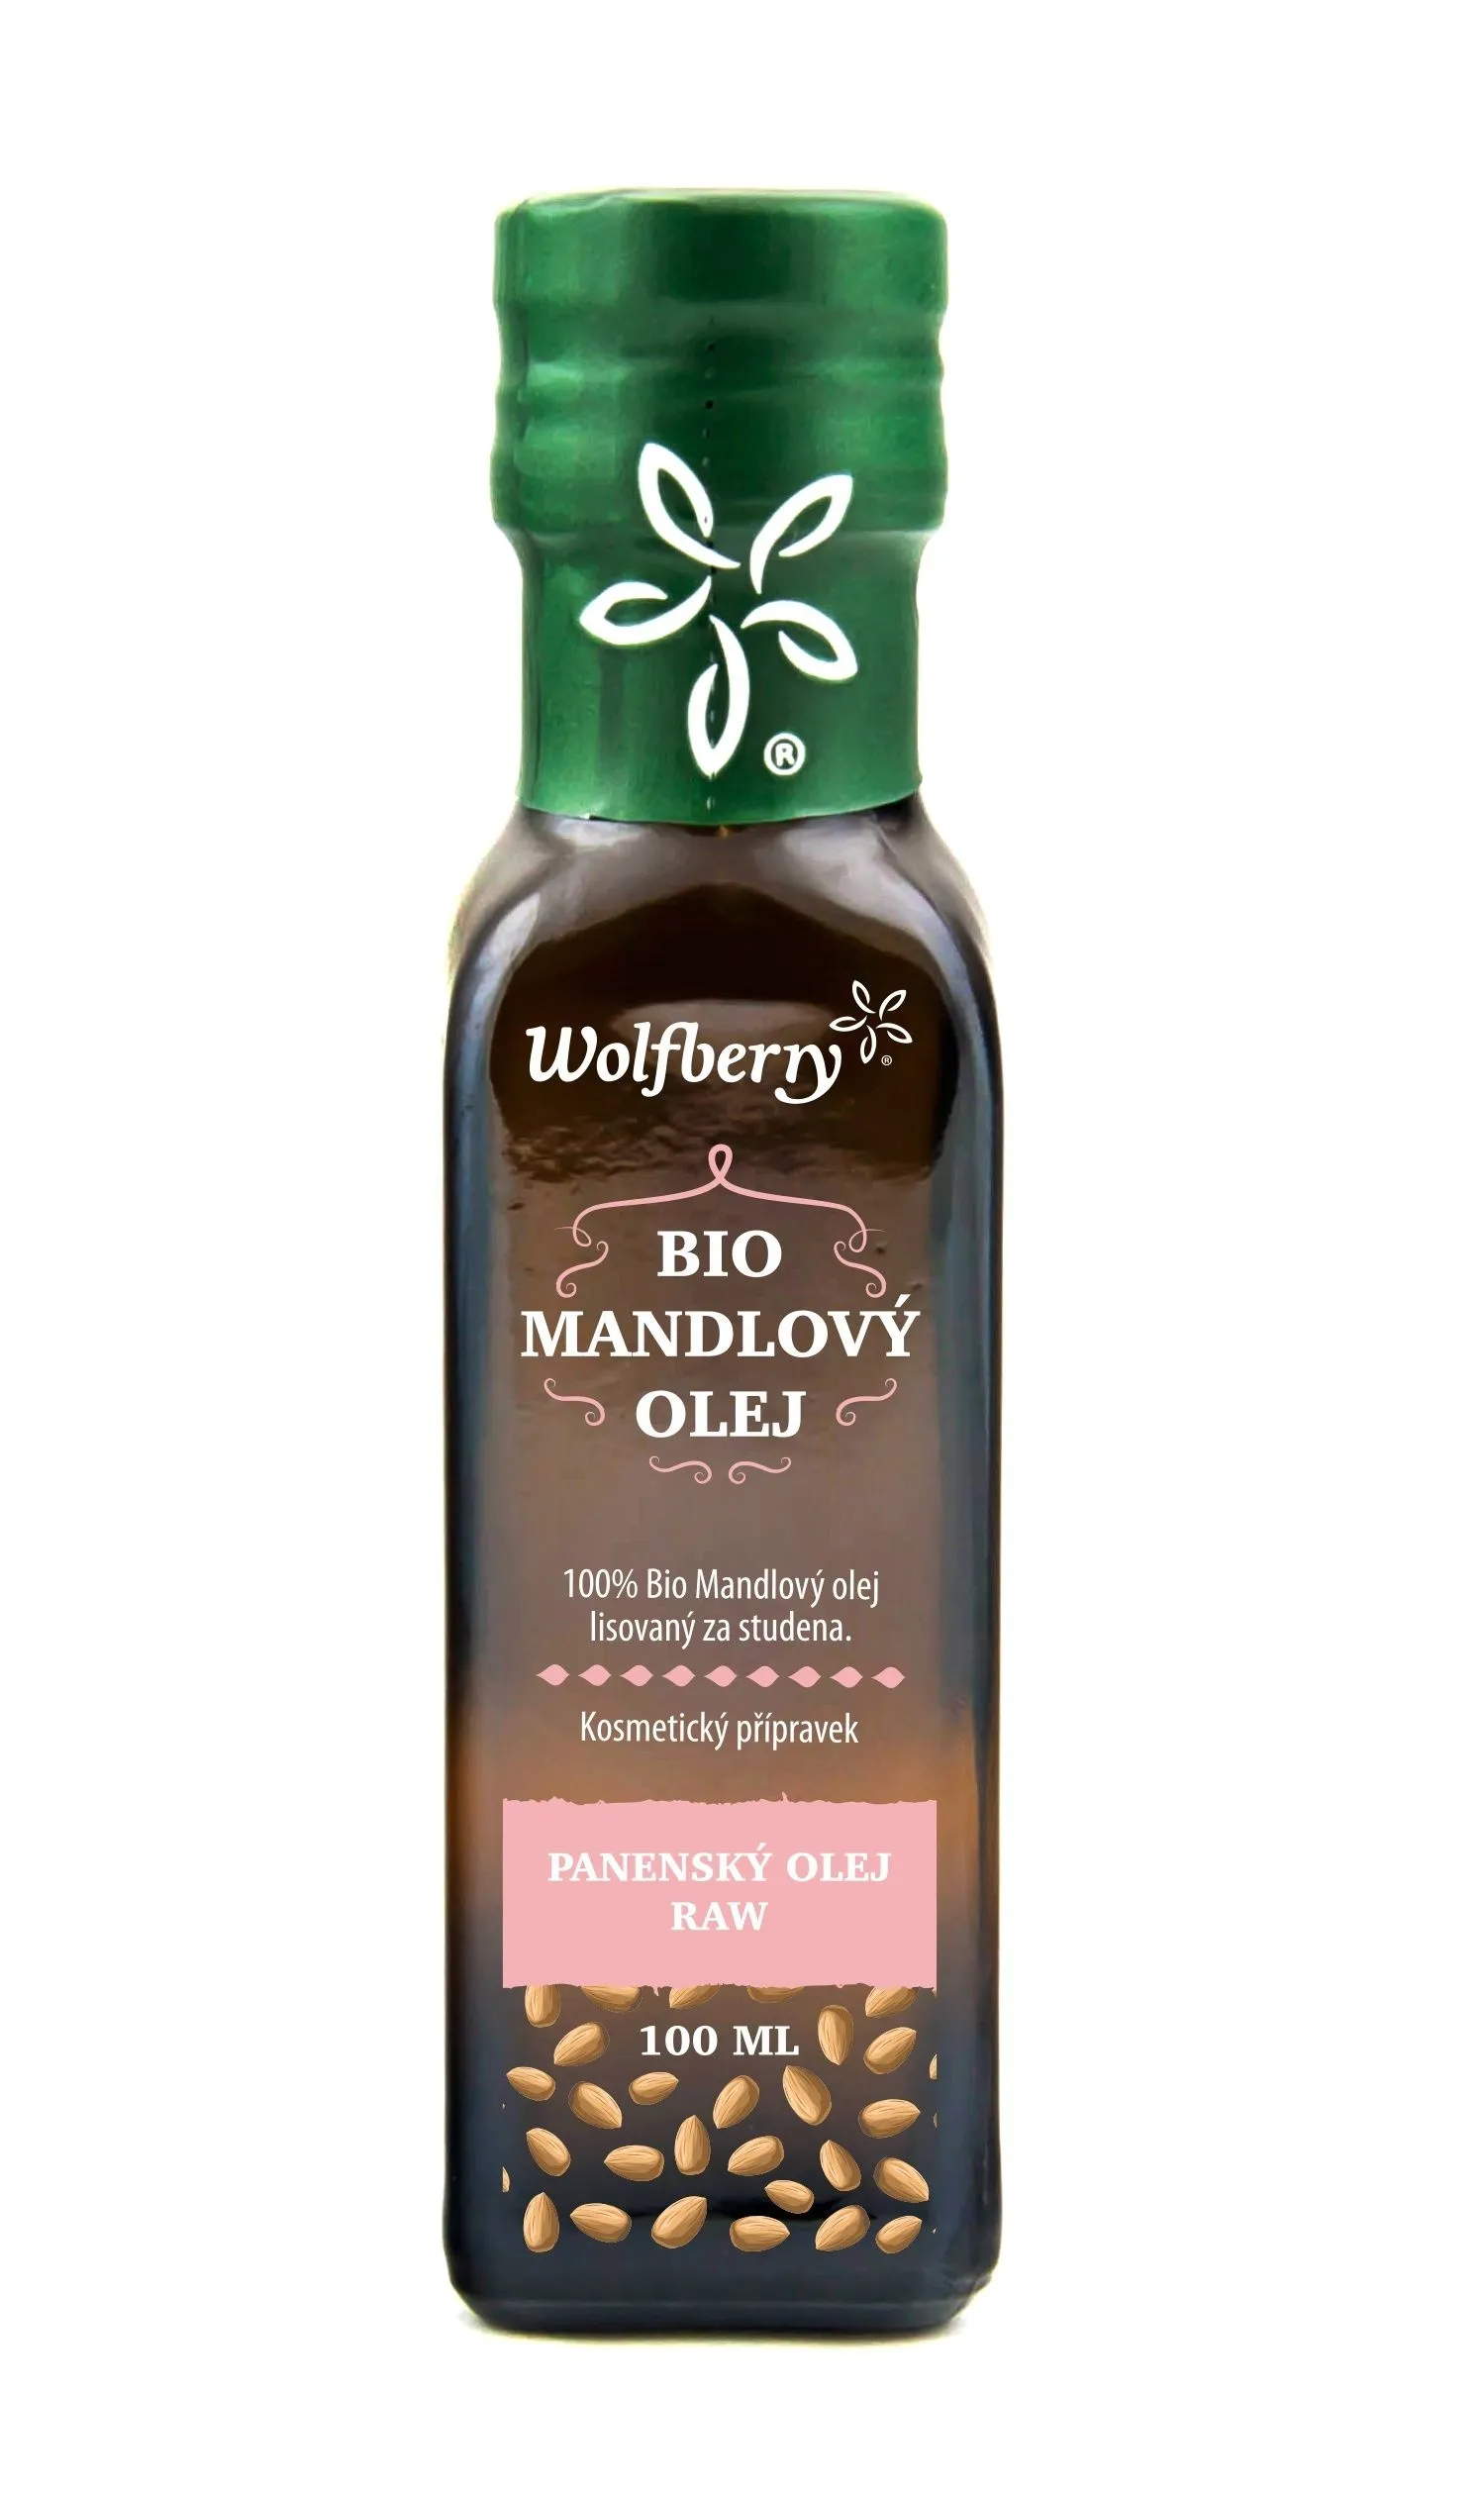 Wolfberry Mandlový olej BIO